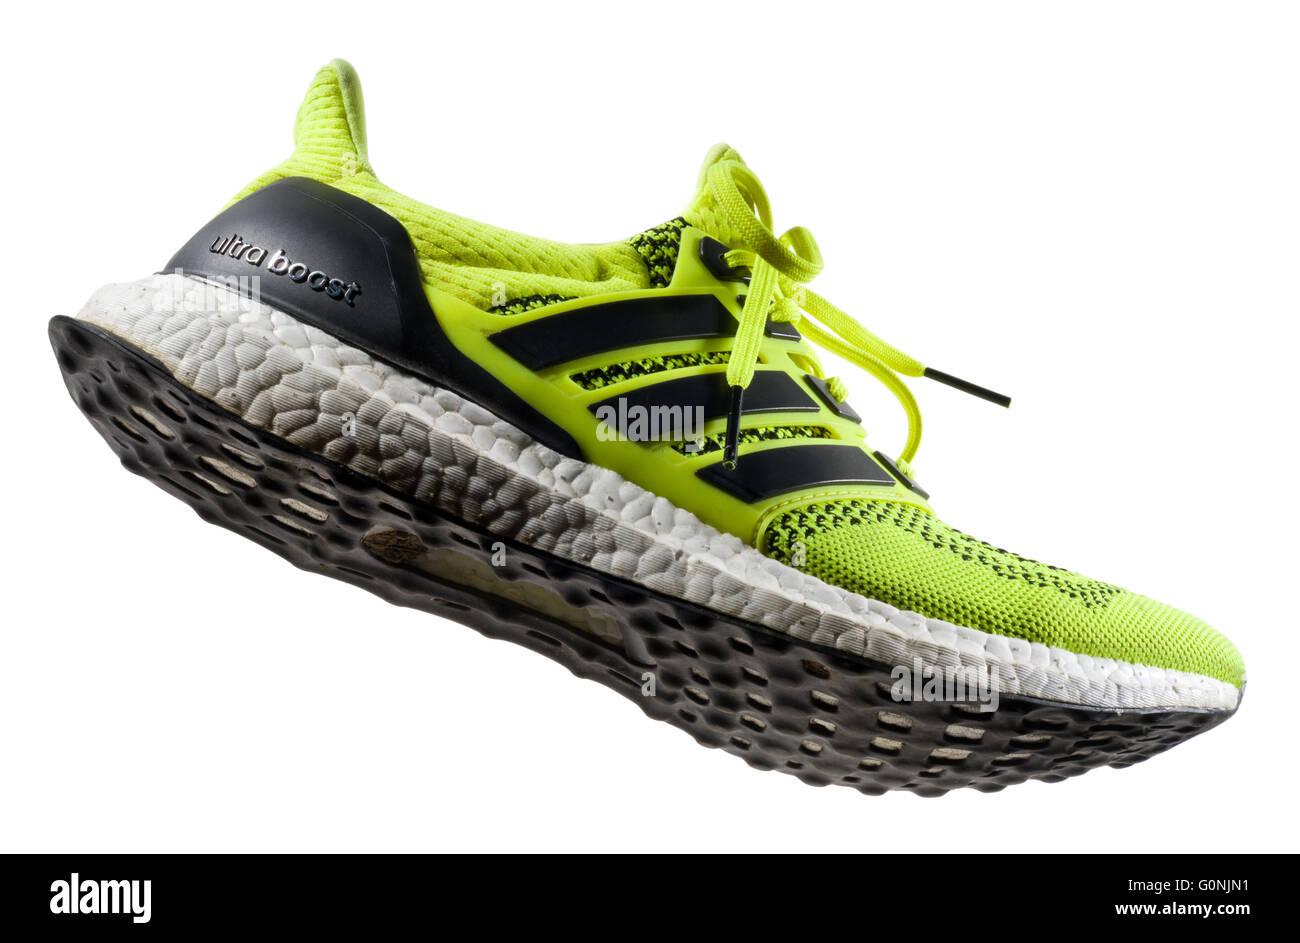 Adidas Ultra Boost Laufschuhe Stockfotografie - Alamy